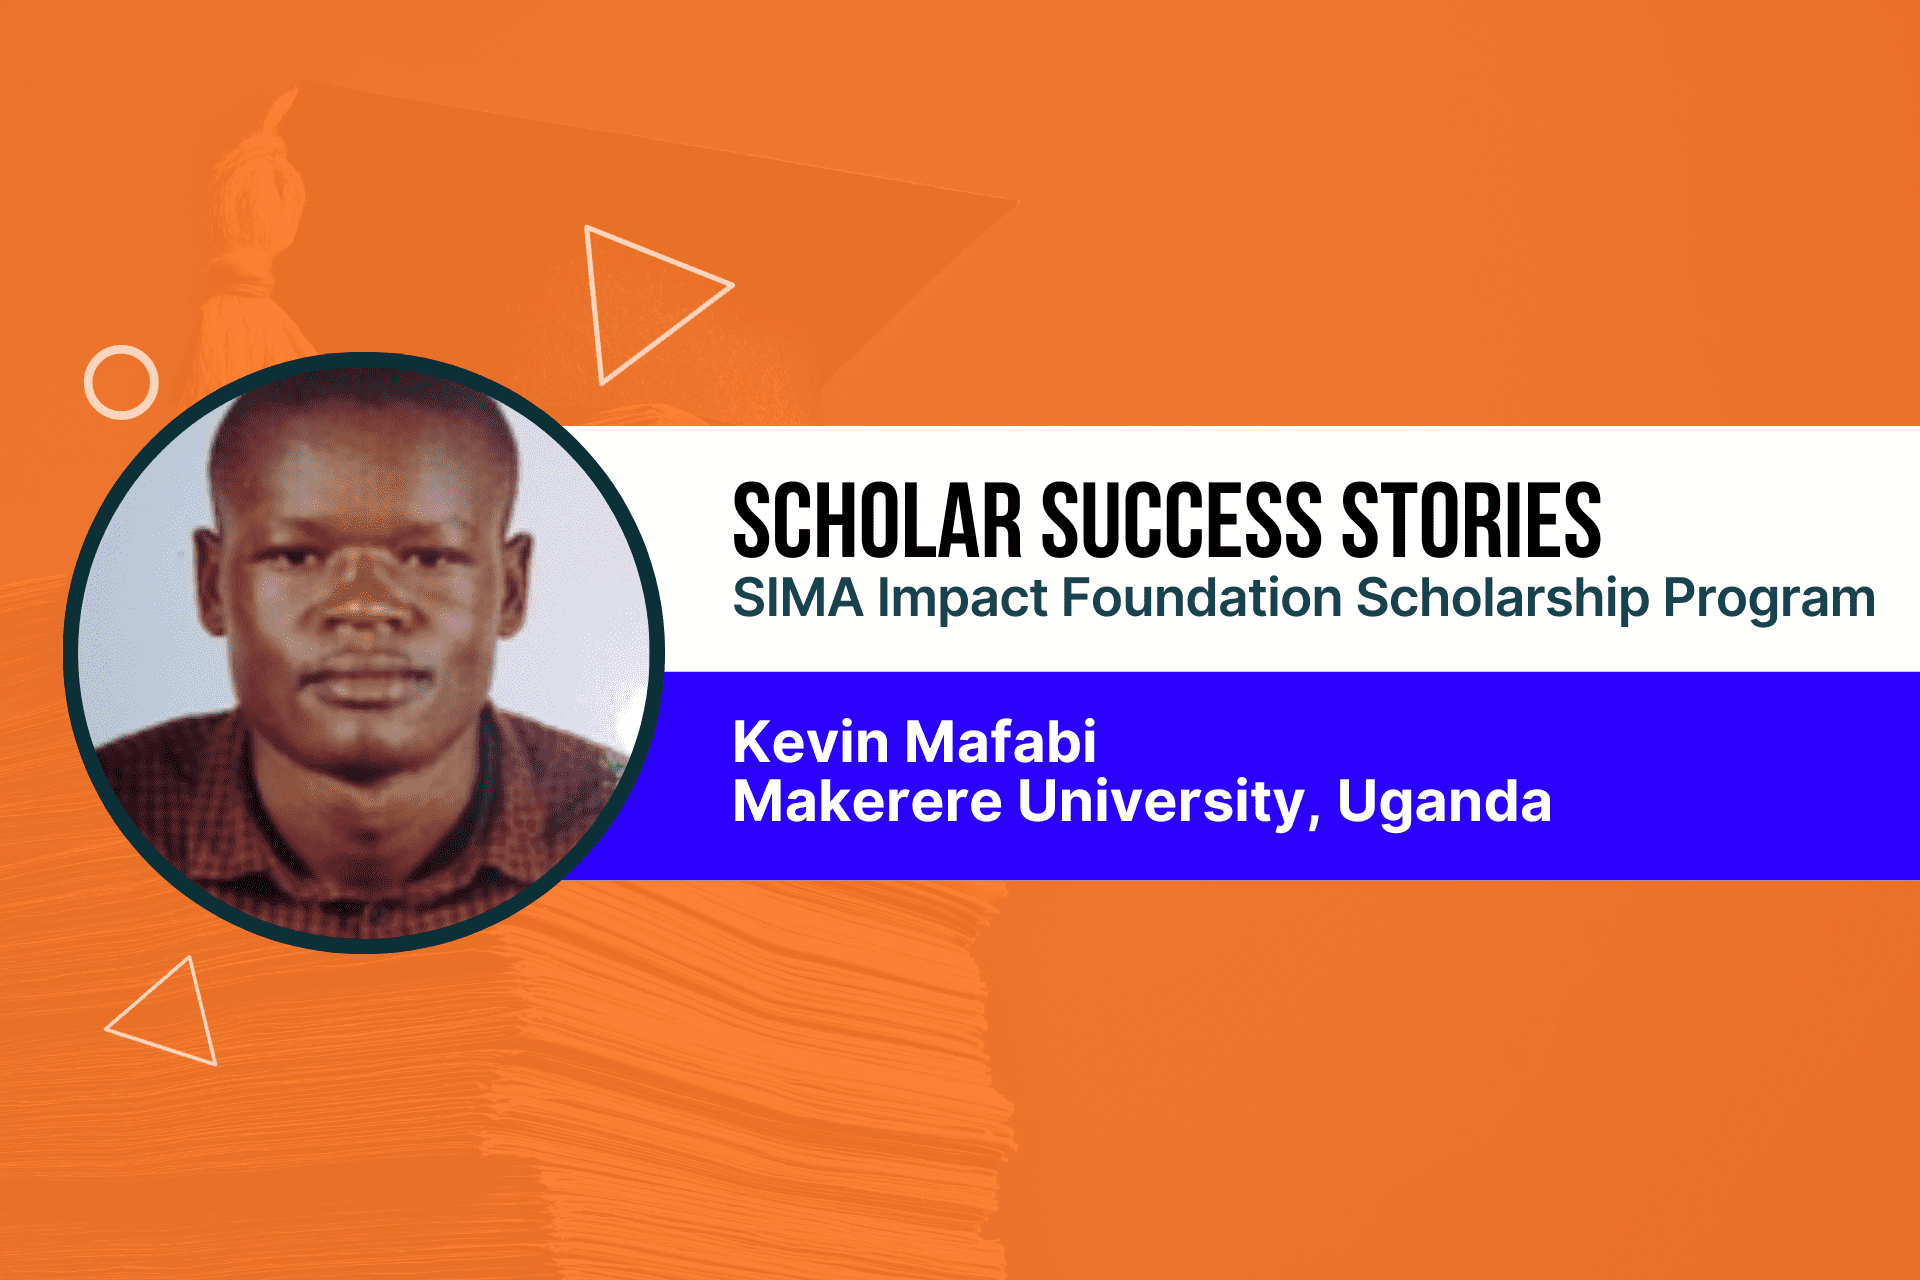 Scholars’ Success Stories 2: Unveiling the Impact of the SIMA Impact Foundation Scholarship Program